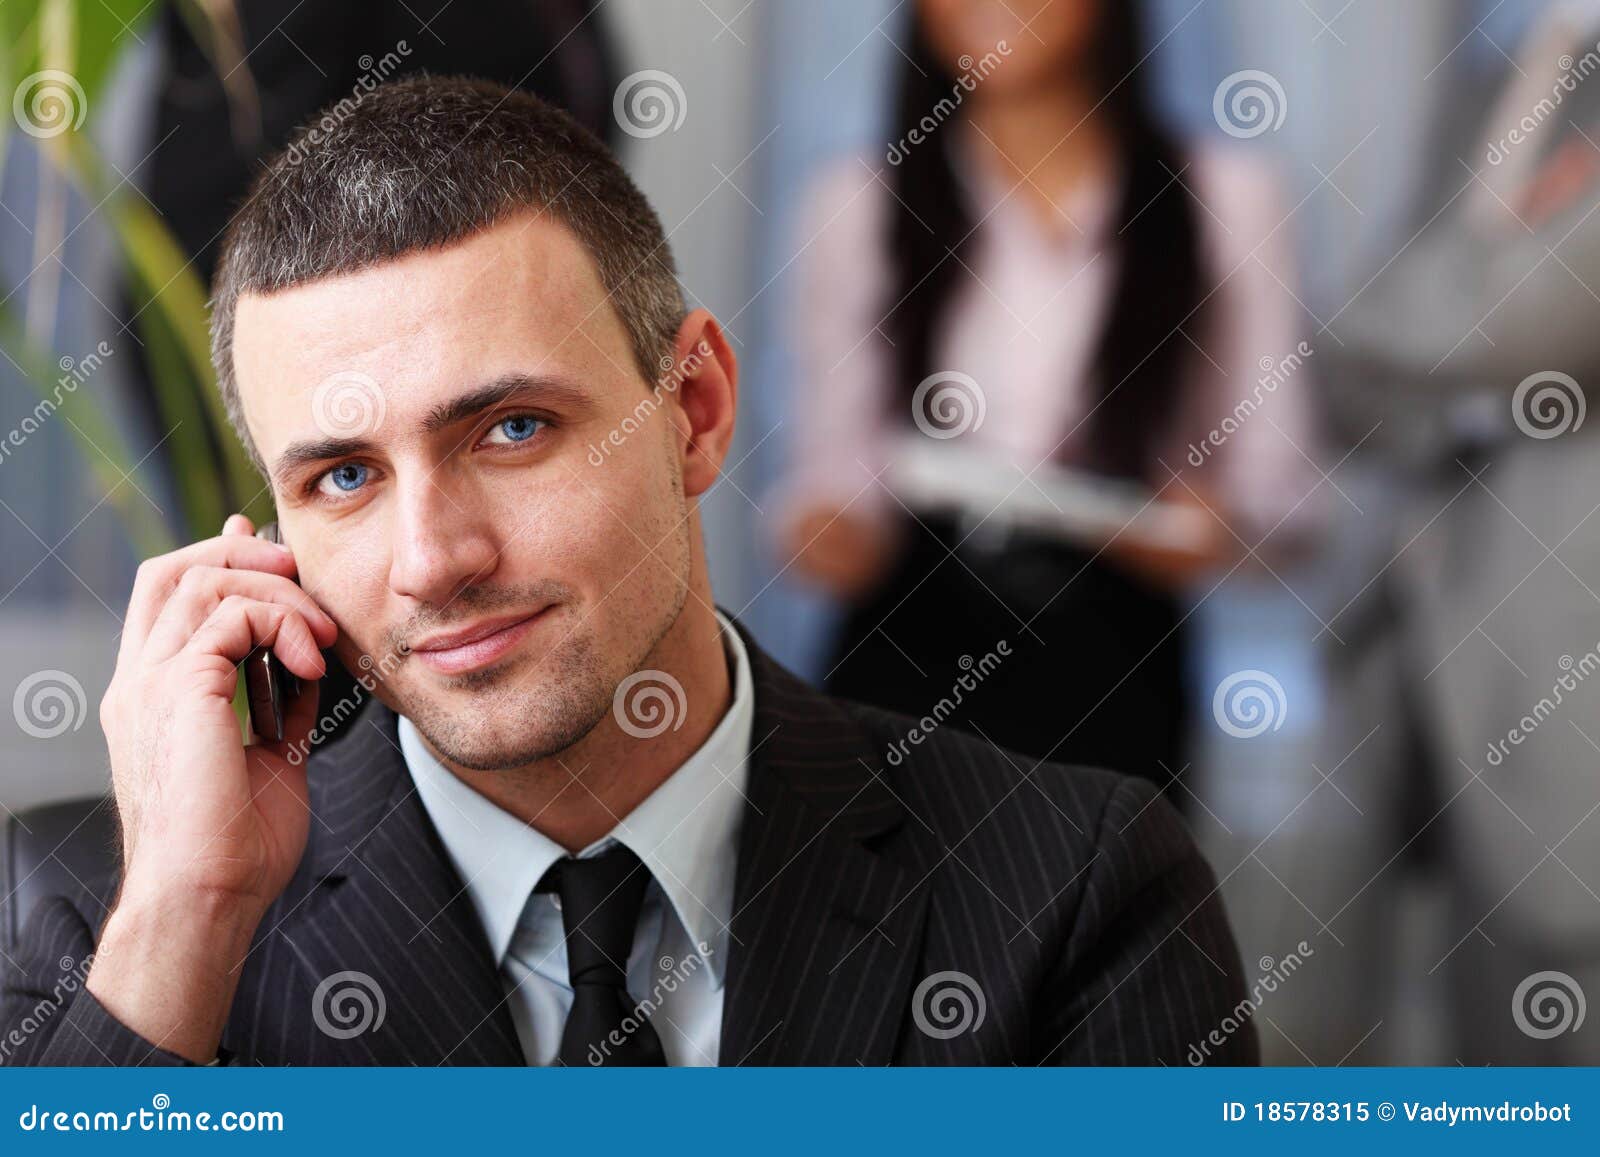 Executive Businessman On The Phone Royalty Free Stock Photo - Image ...